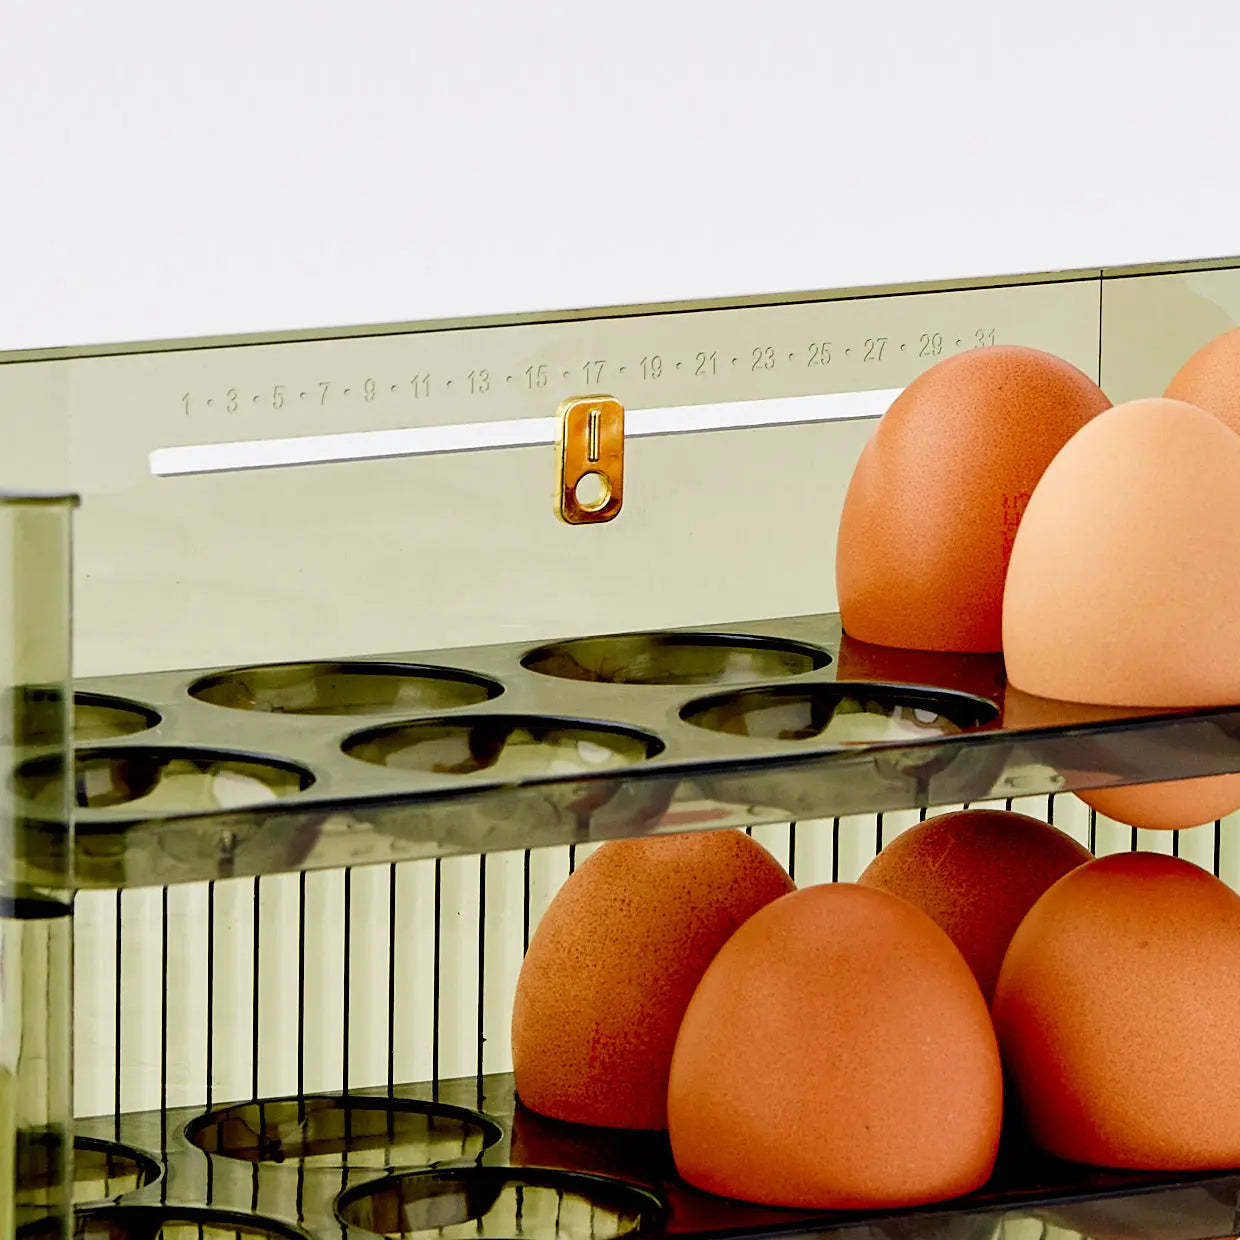 Egg Storage Container Box - GigiandTom